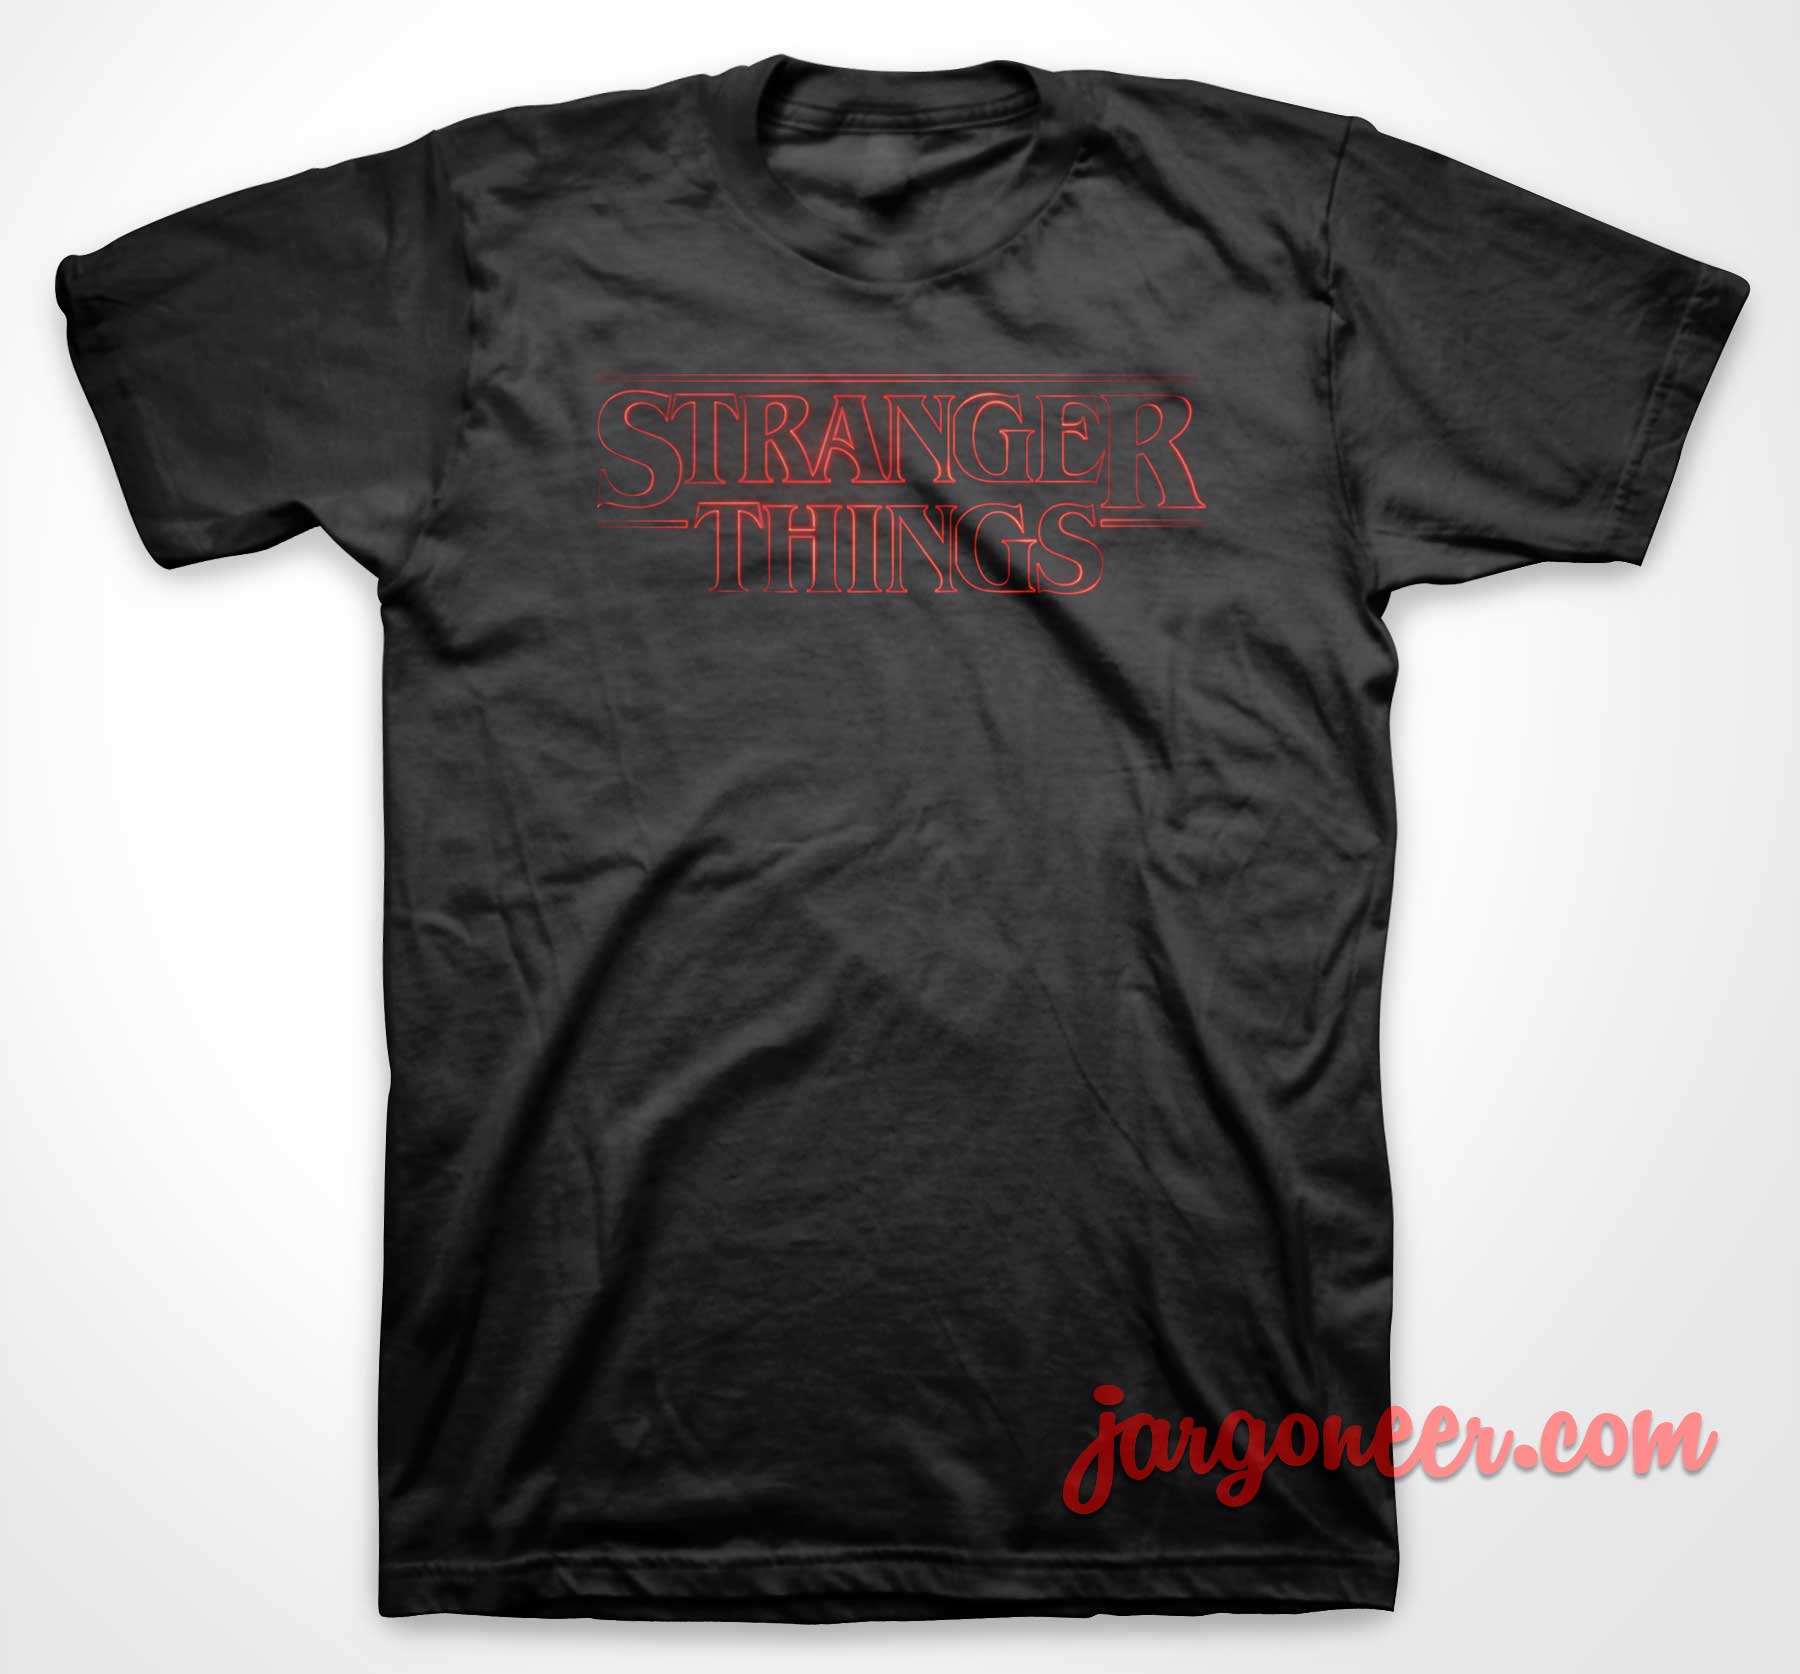 Stranger Things Logo - Shop Unique Graphic Cool Shirt Designs